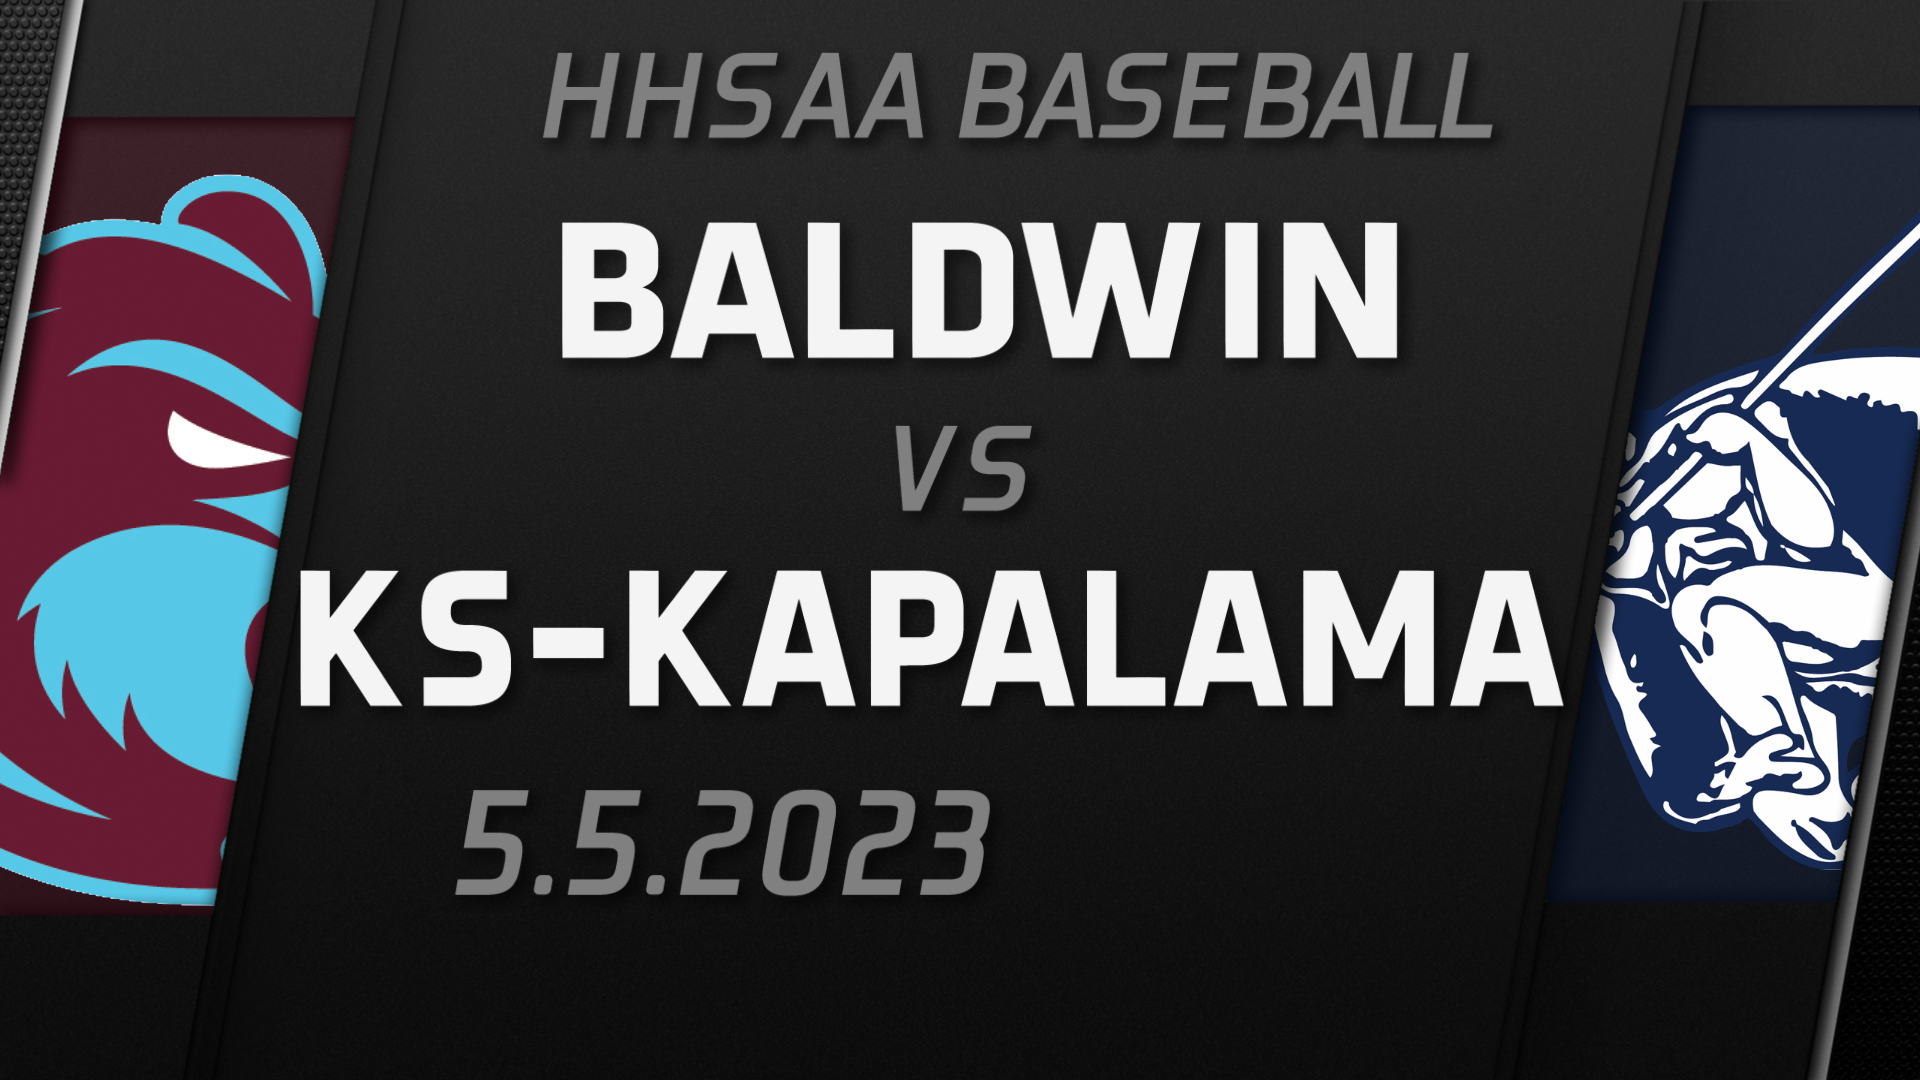 2023 HHSAA Baseball D1 Championship Baldwin vs KSKapalama